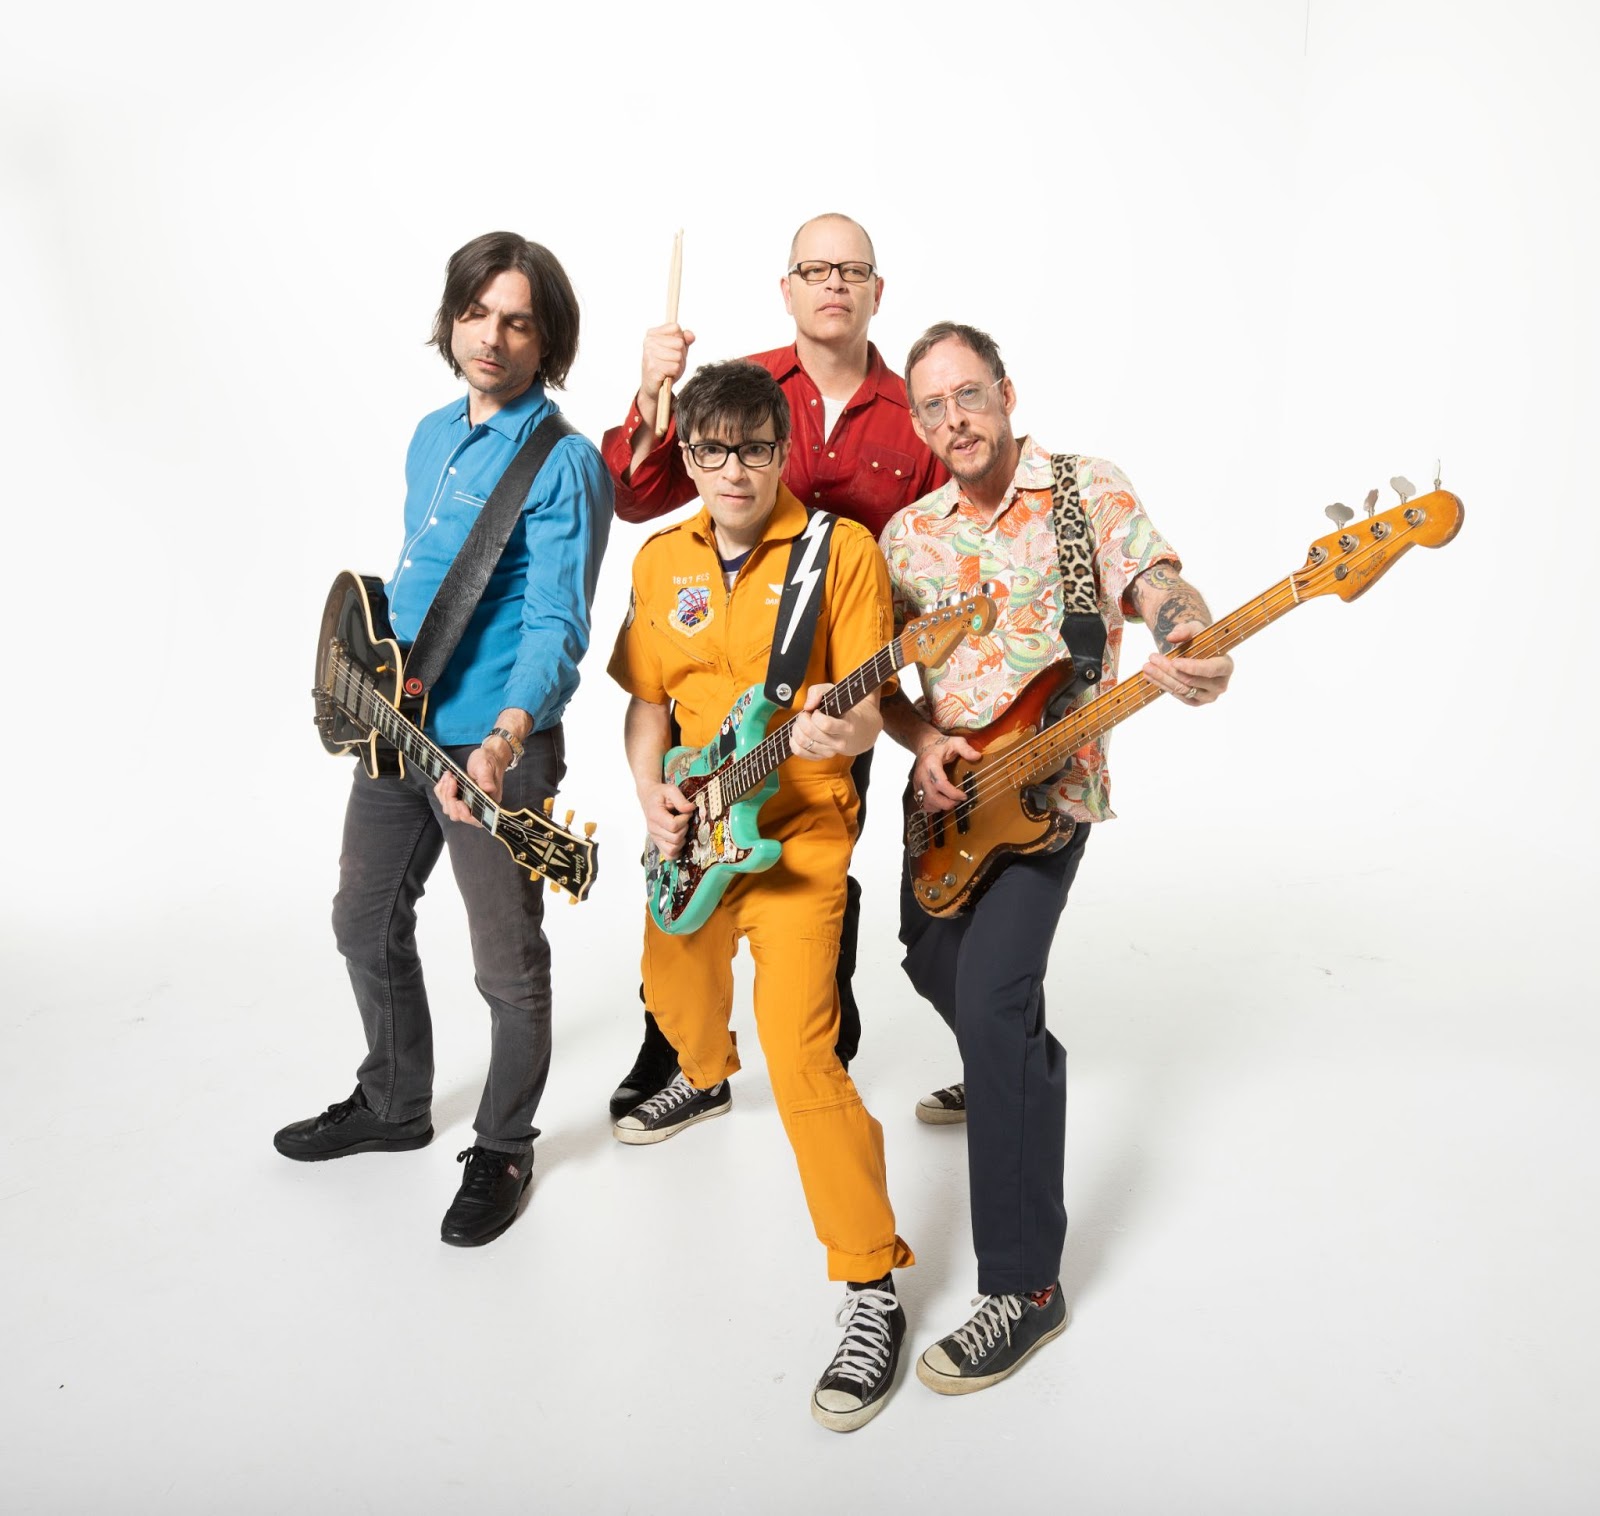 Band Jury: Geese Defend Weezer’s <i>Make Believe</i>